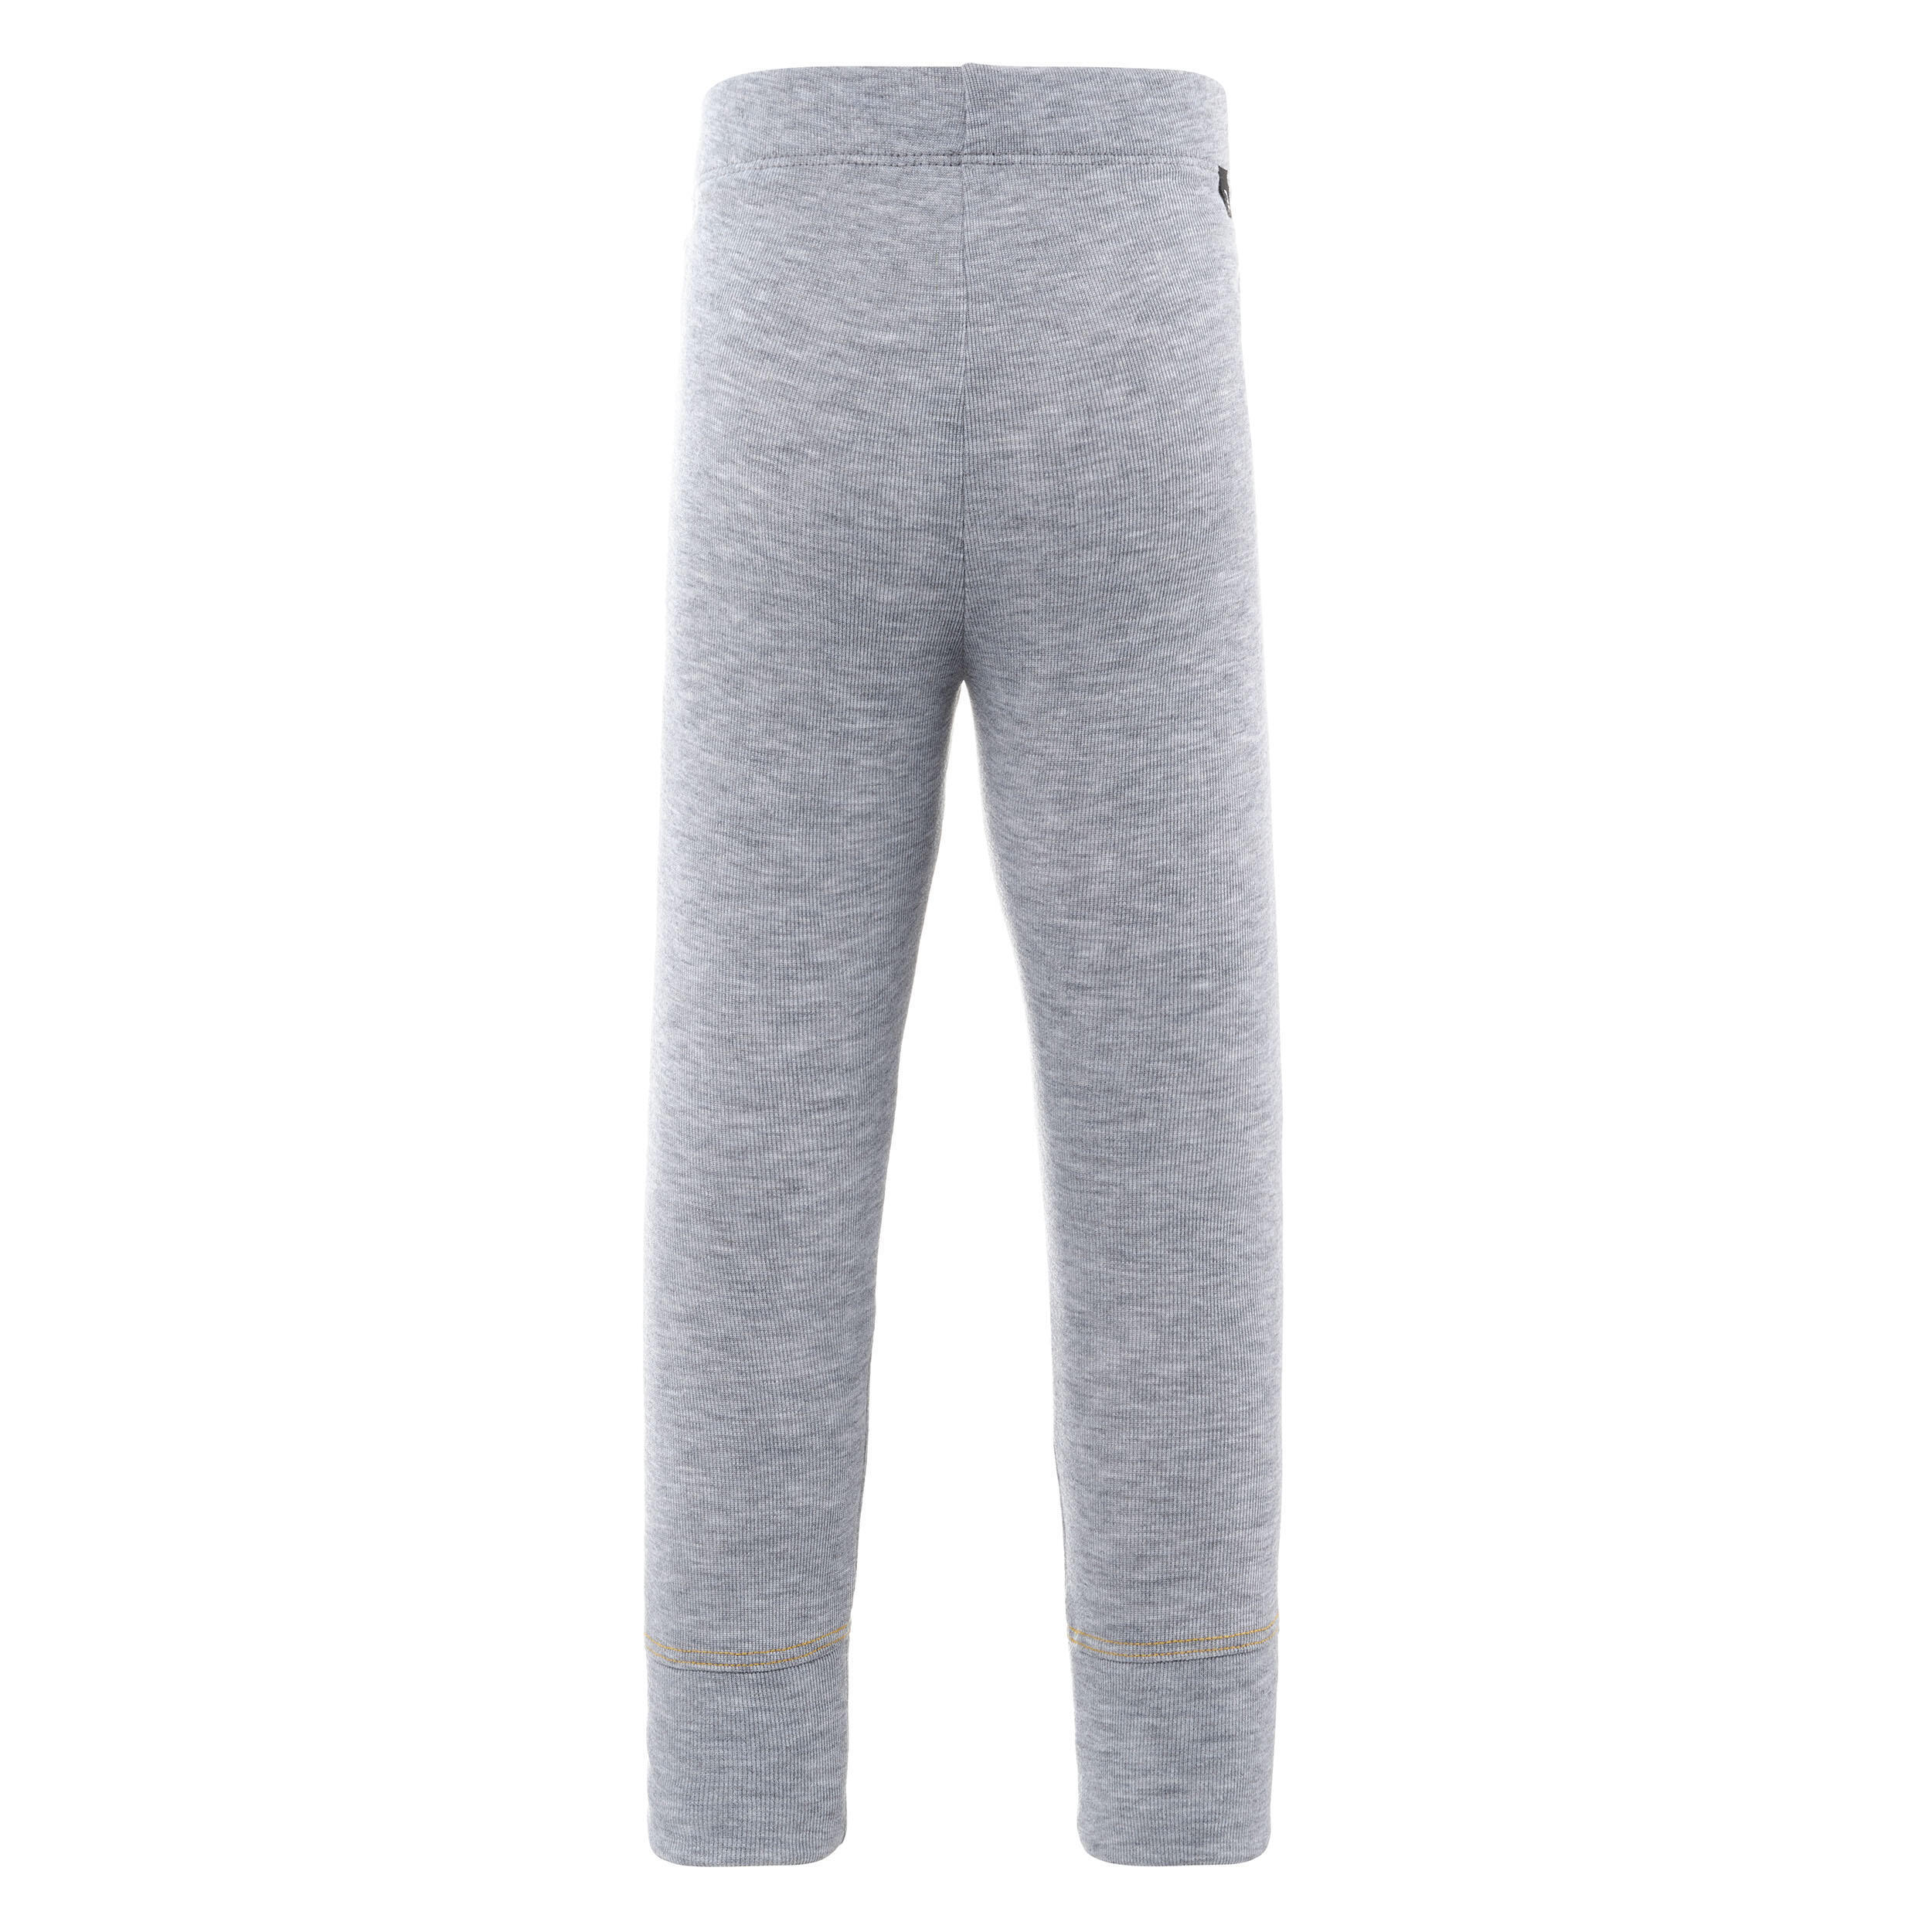 Base layer trousers, Baby ski leggings - WARM grey 6/11